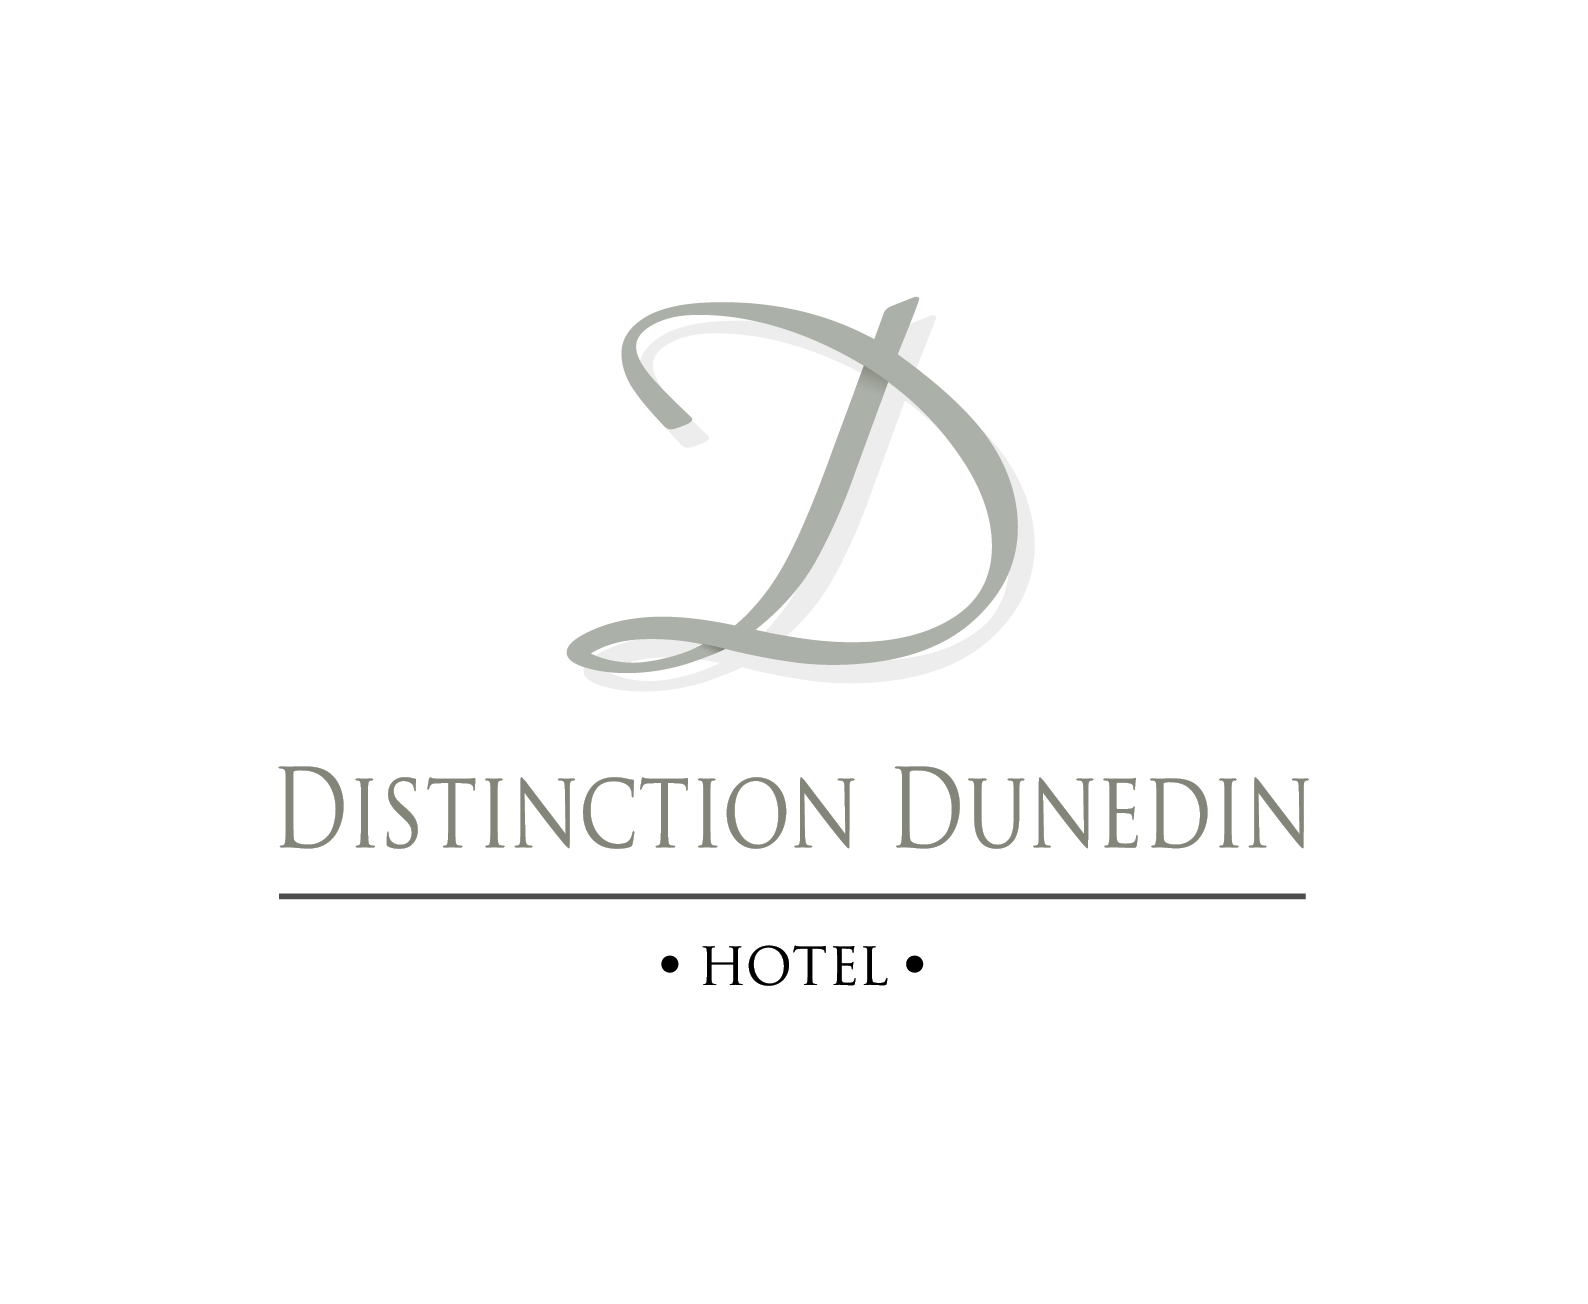 
Distinction Dunedin Hotel